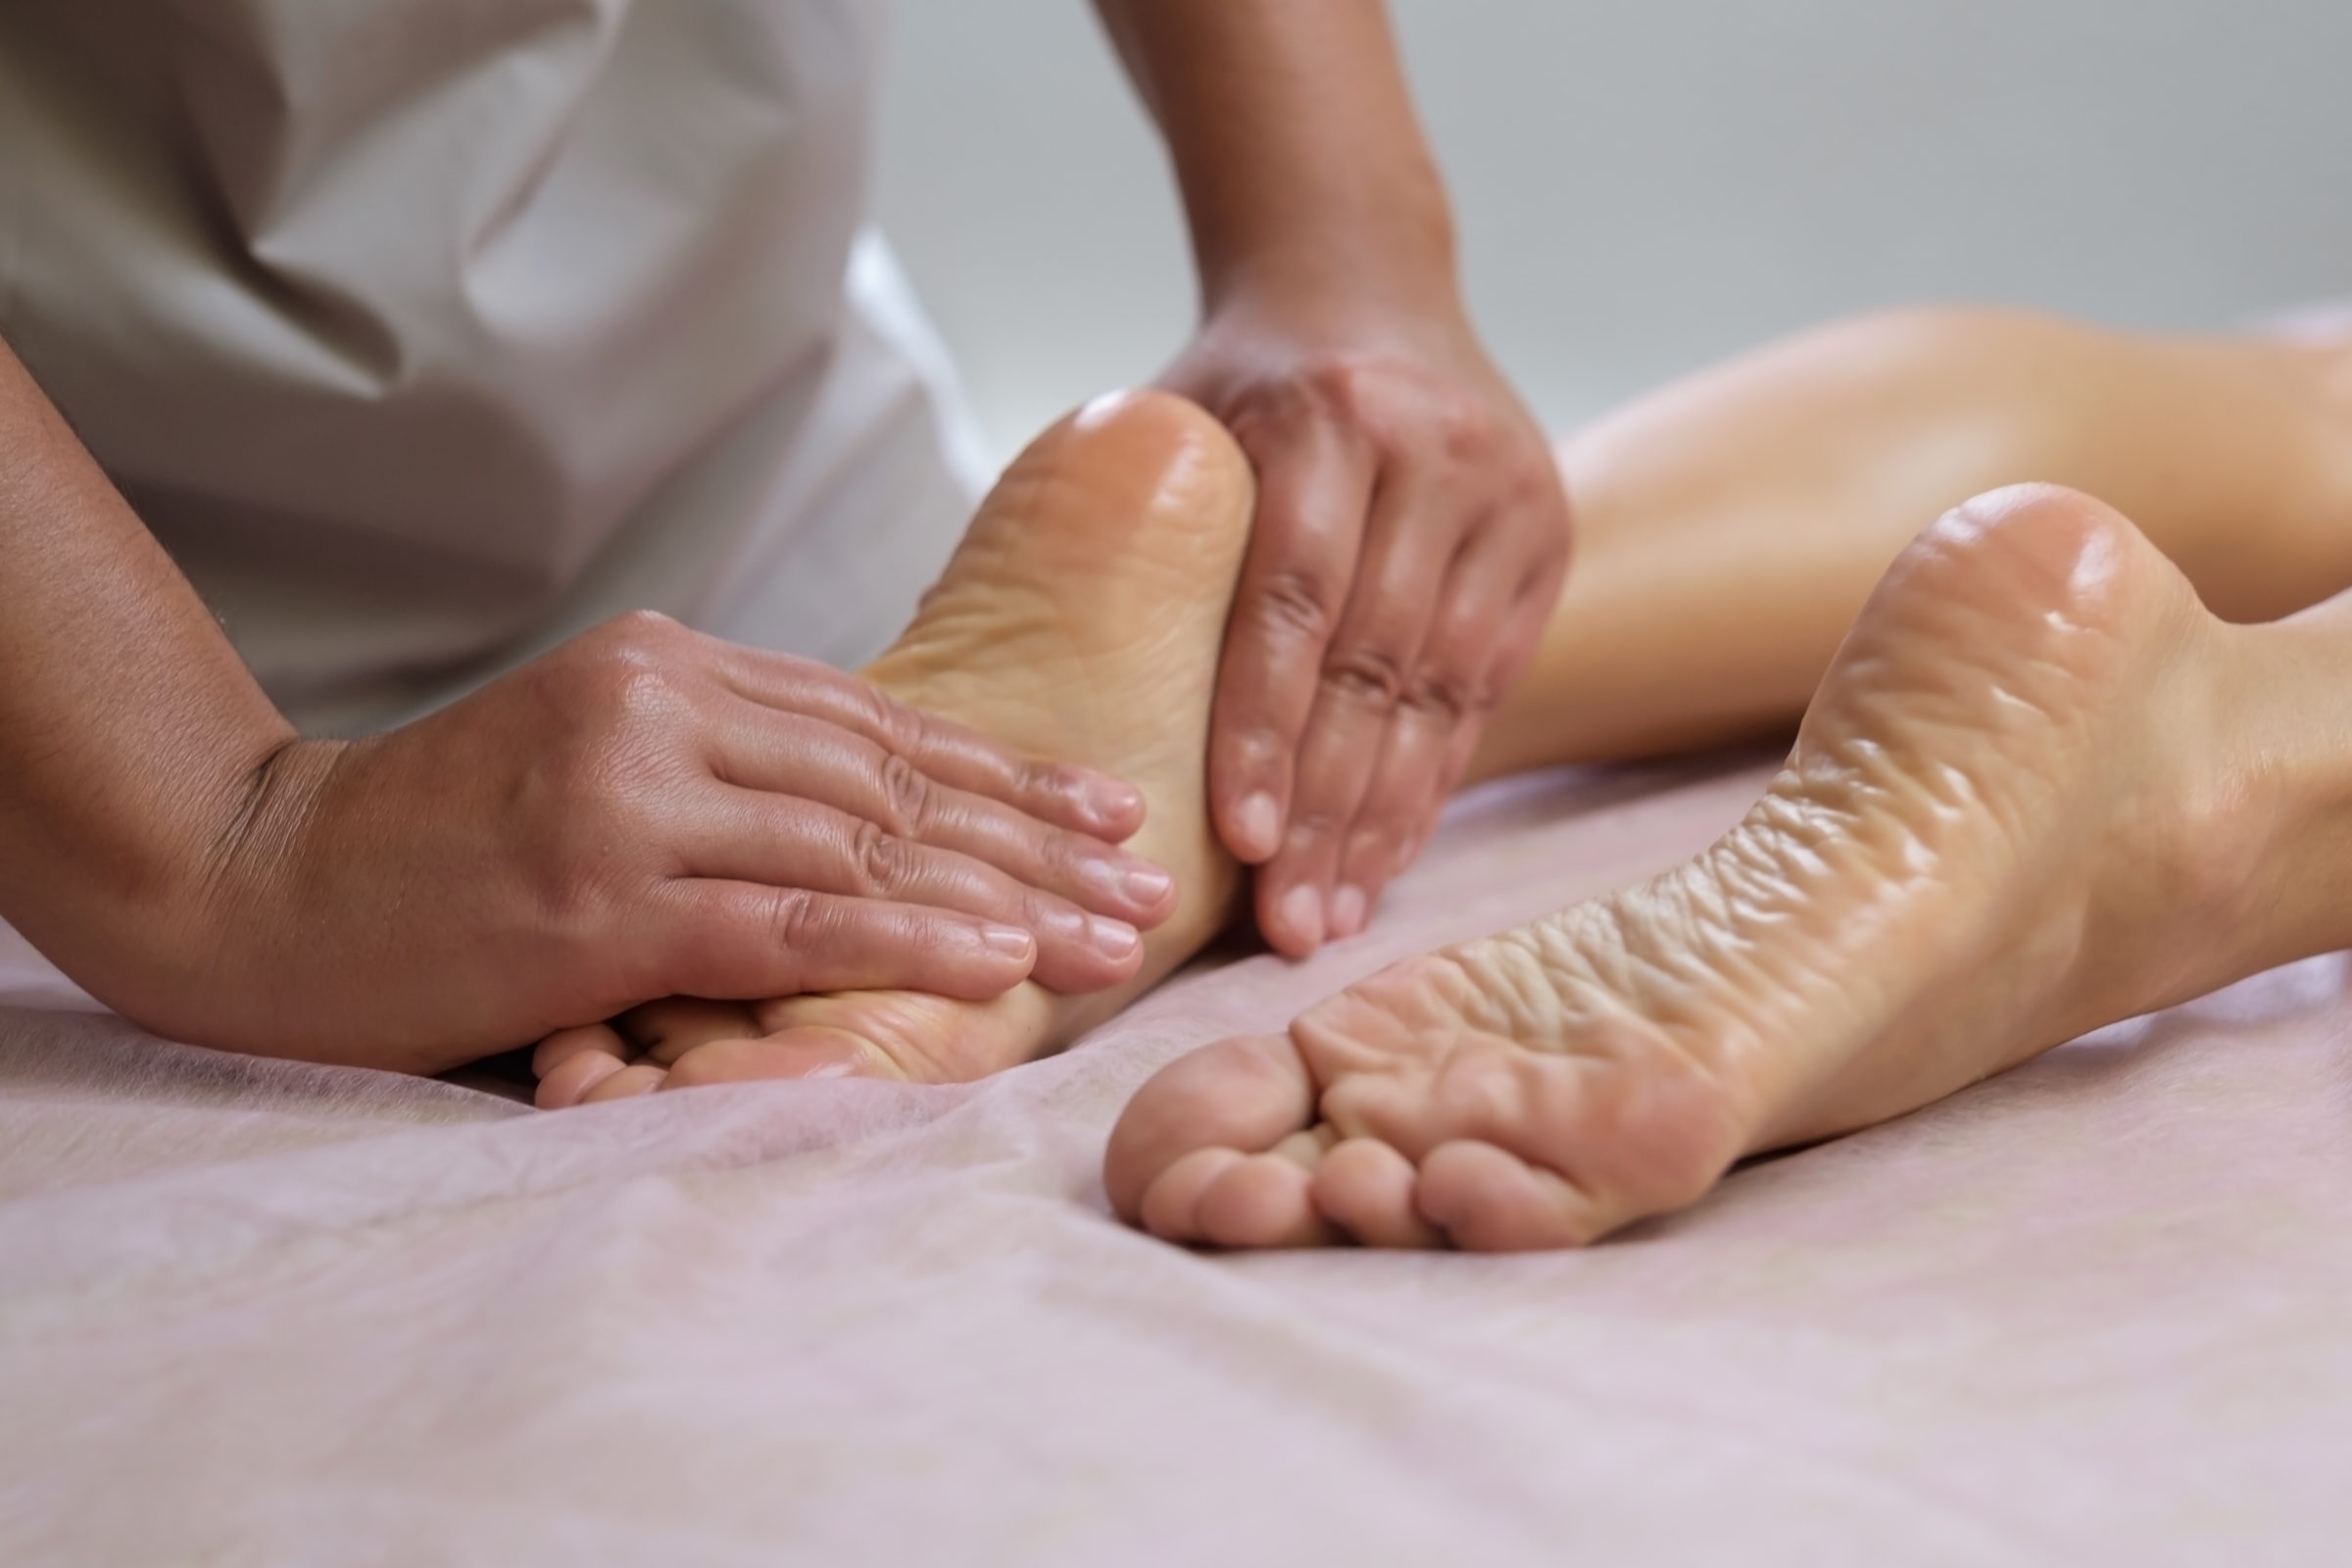 foot massage in the spa salon at spa salon F2A2AWU